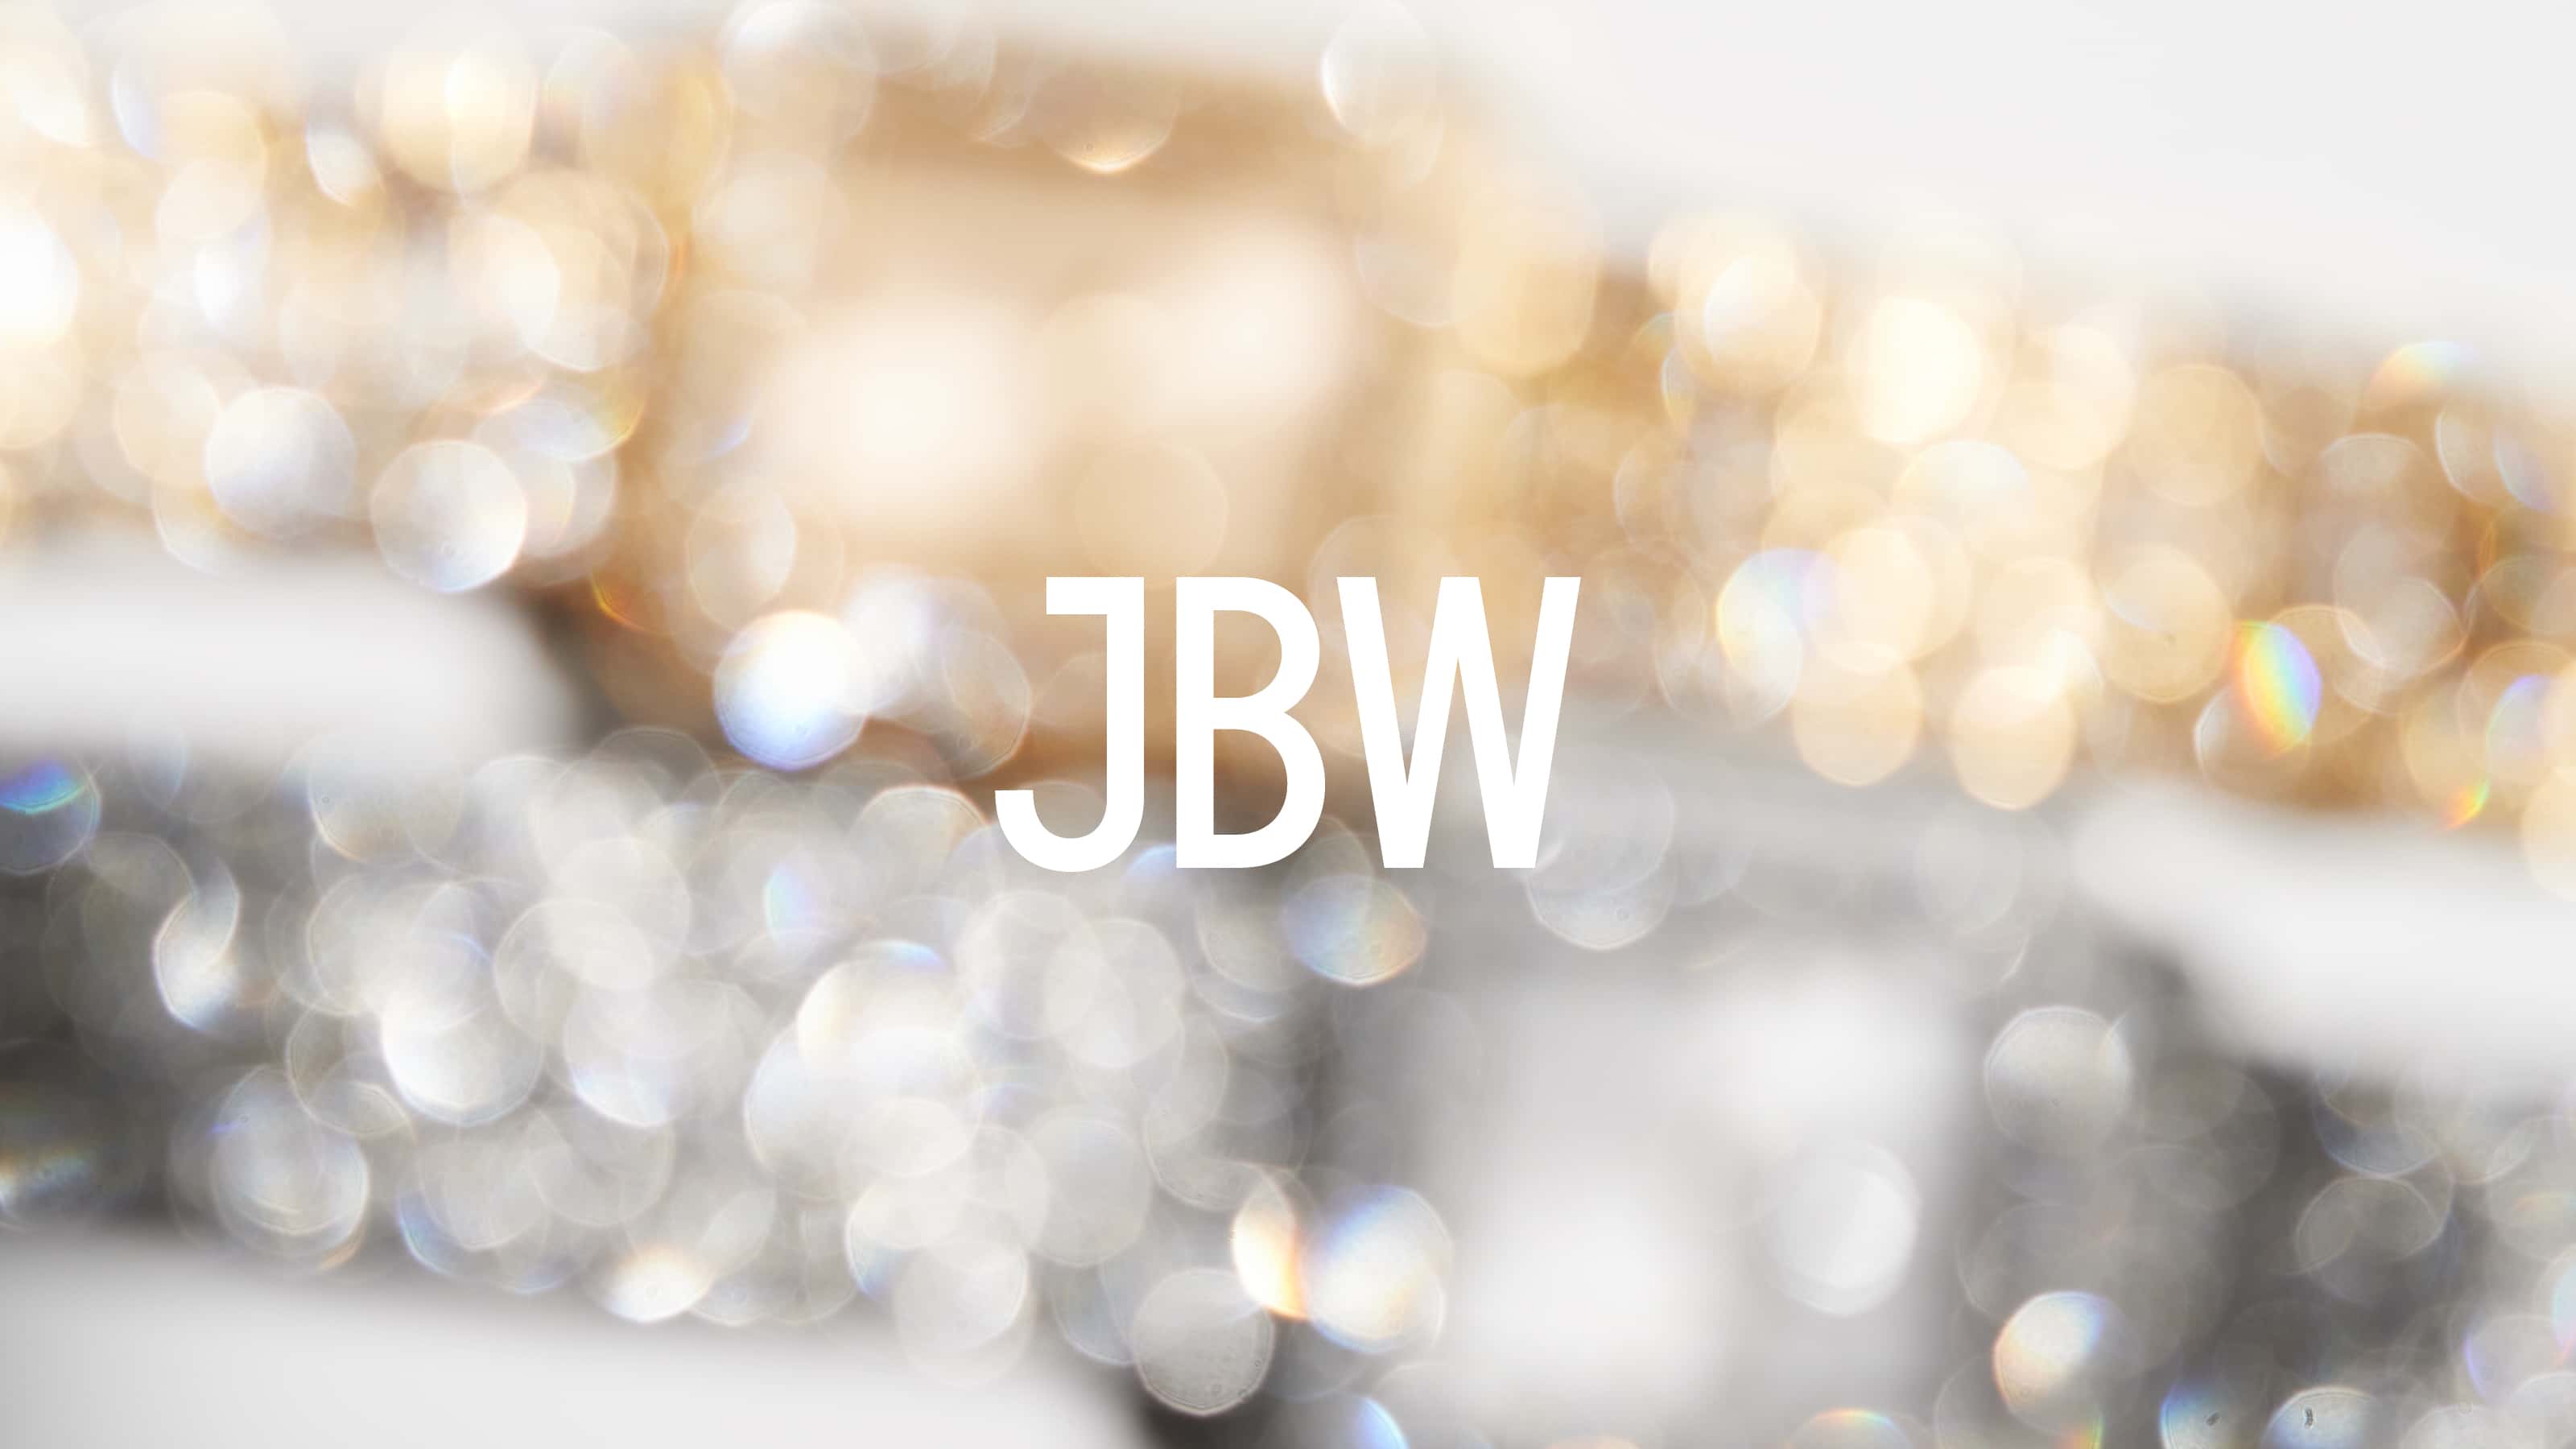 www.jbw.com